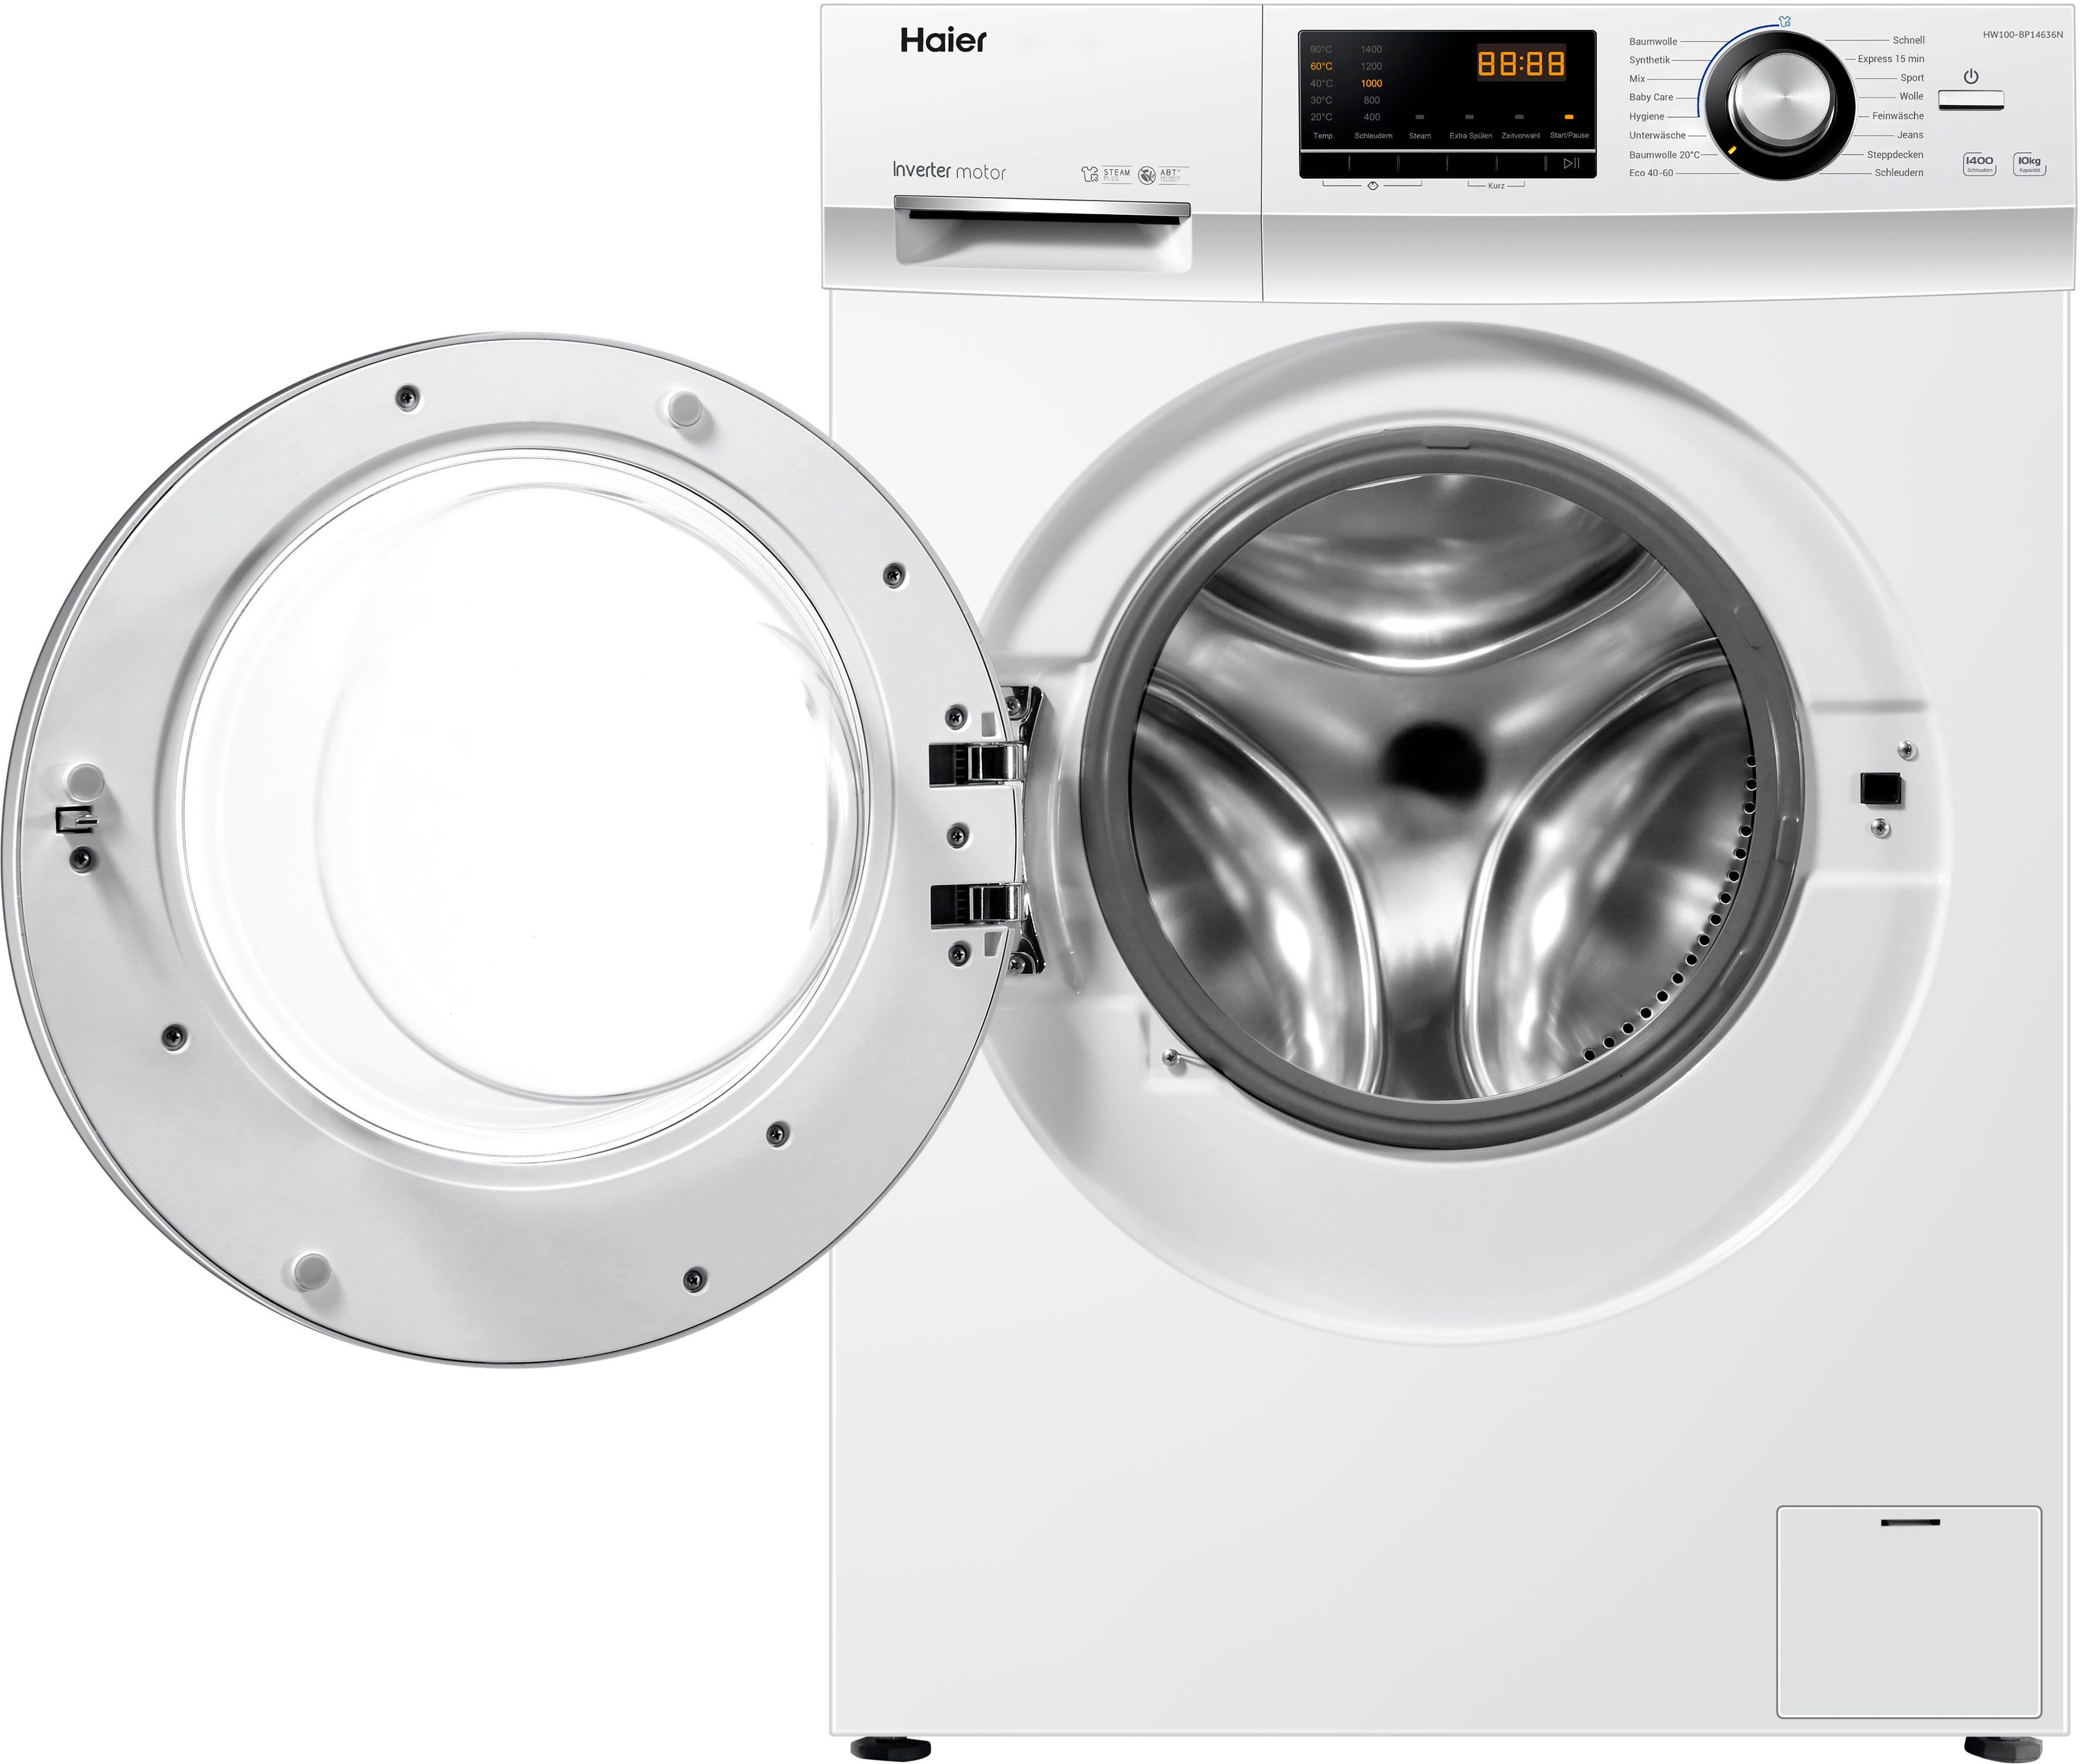 Haier U/min 10 Waschmaschine HW100-BP14636N, kg, 1400